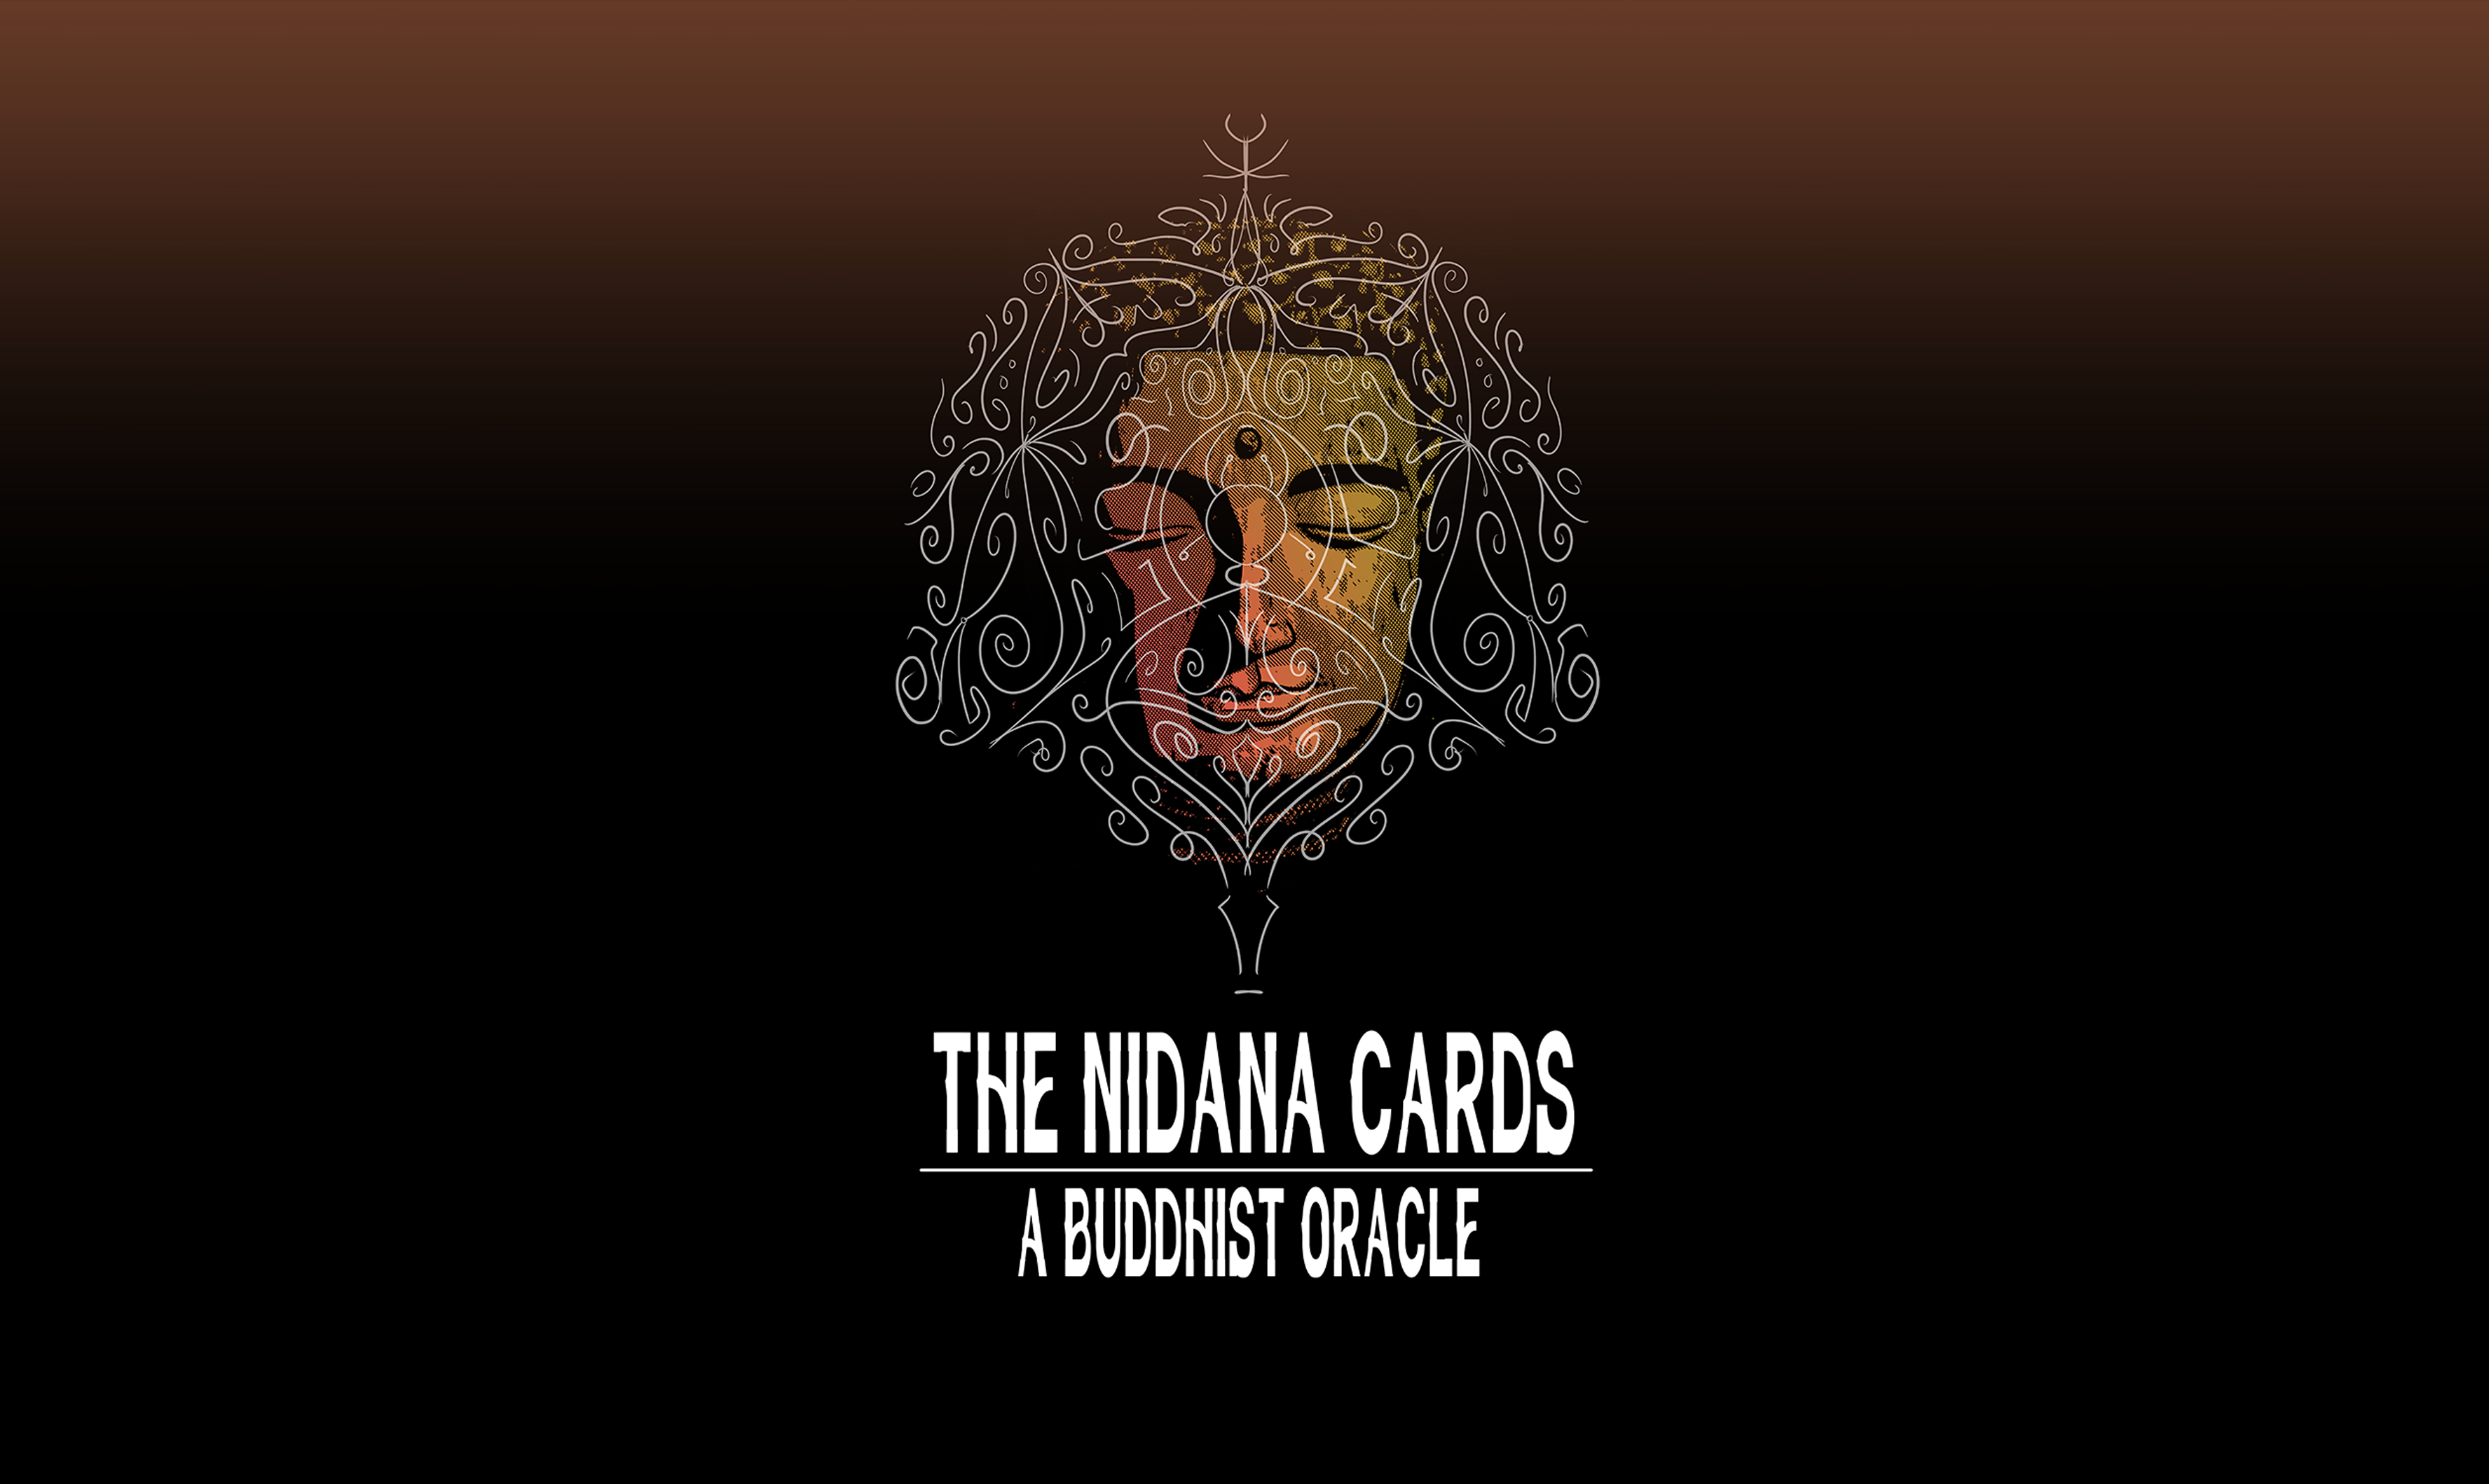 Permalink to:The Nidana Cards